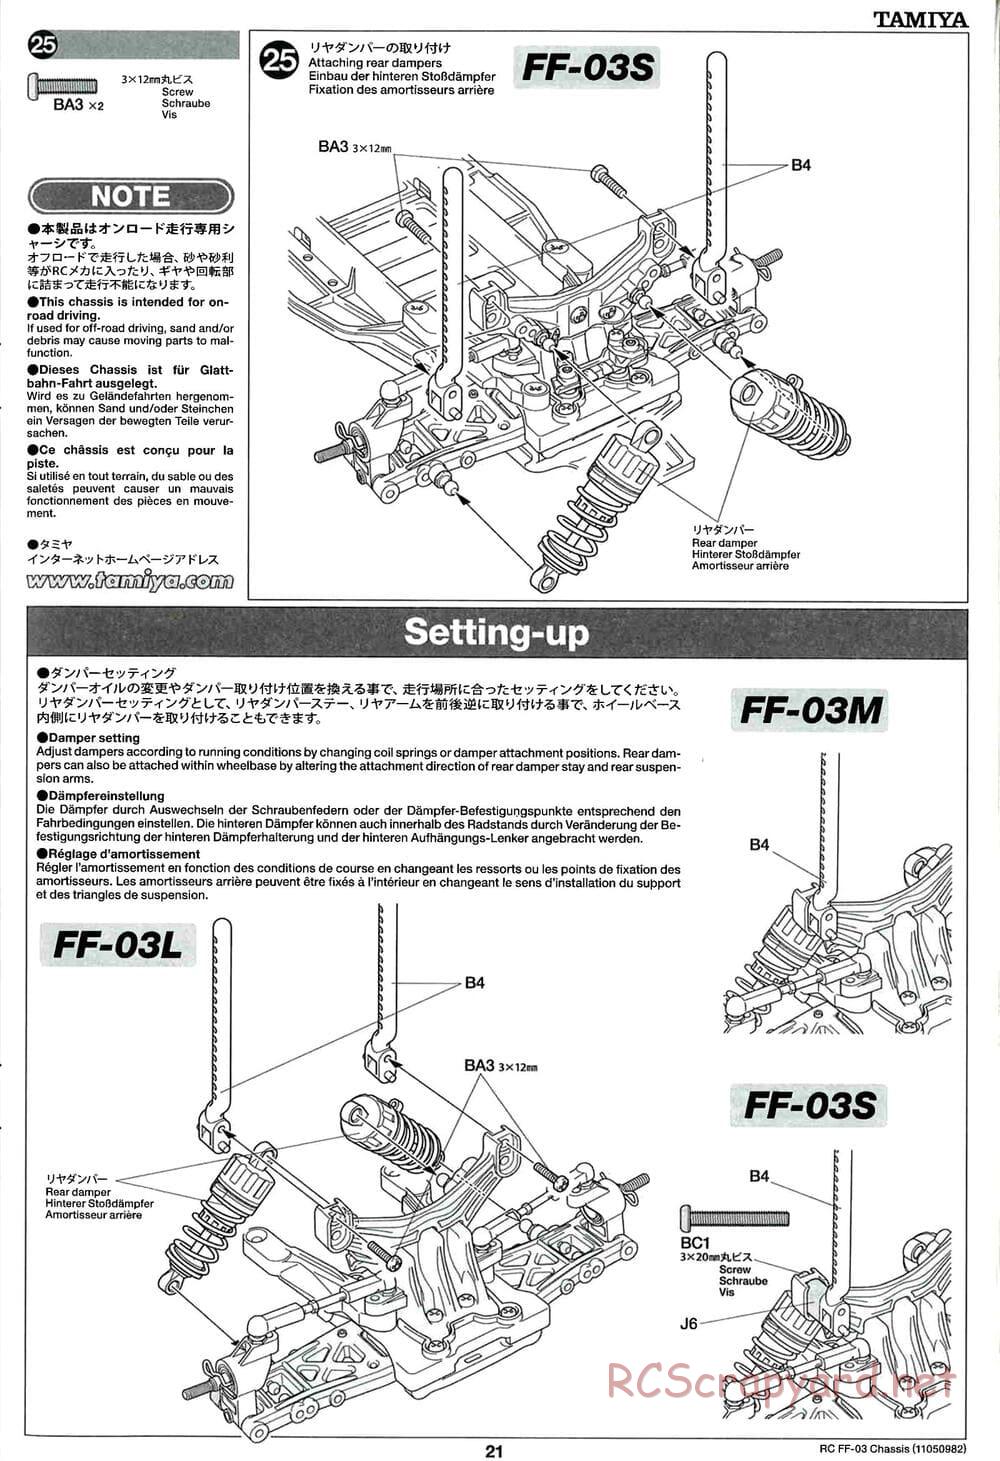 Tamiya - FF-03 Chassis - Manual - Page 21